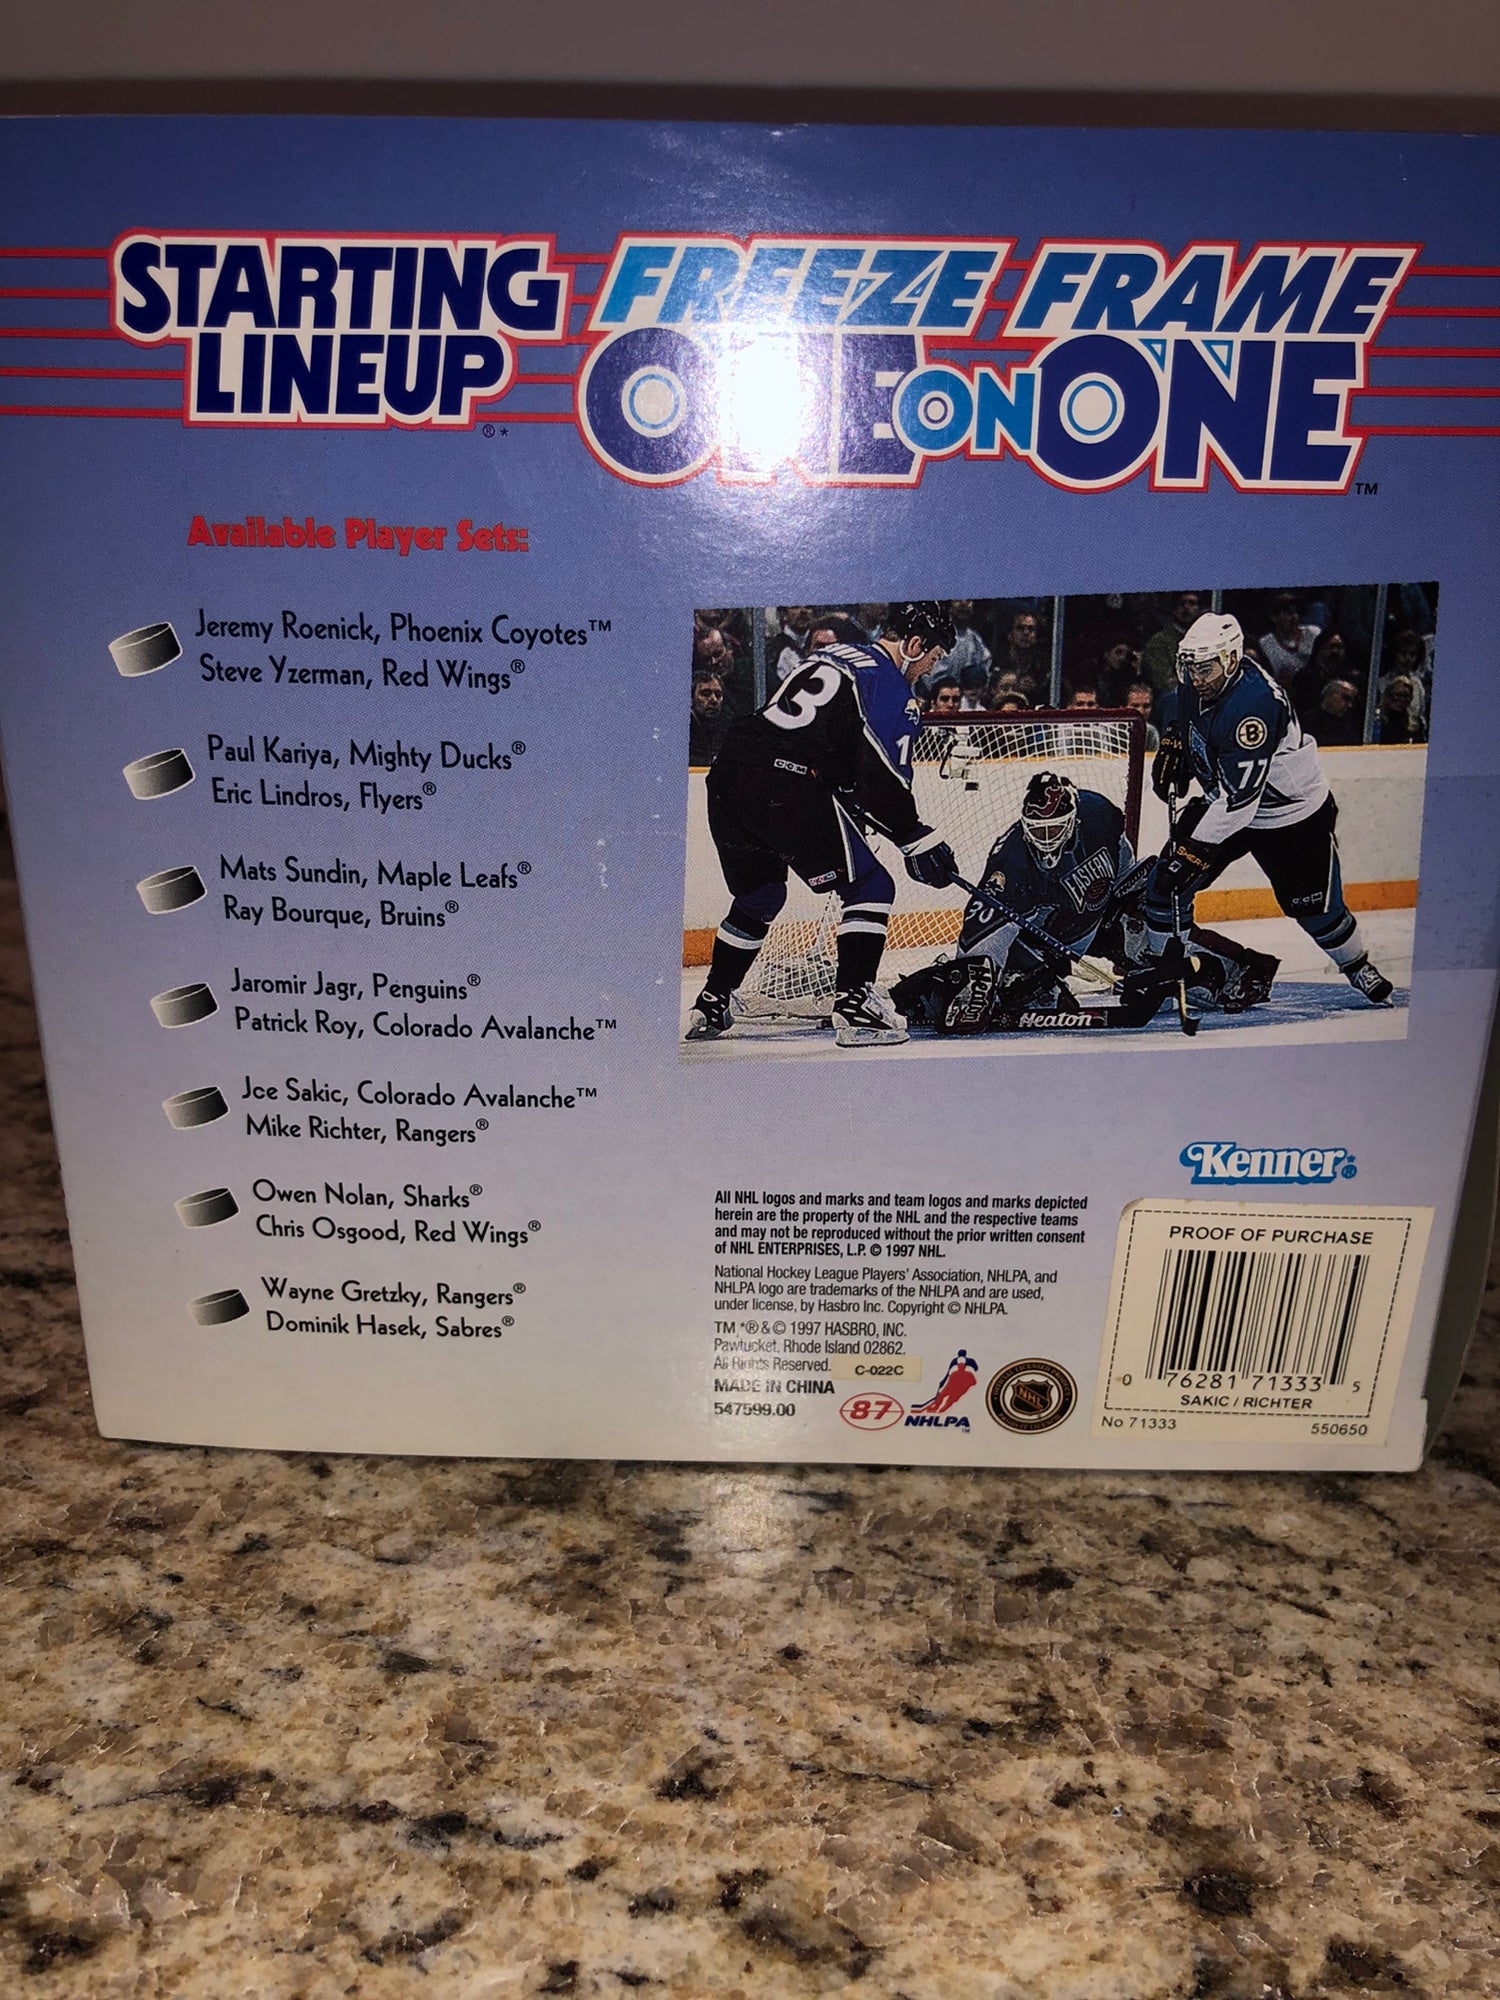 1997 Starting Lineup Freeze Frame Sundin Bourque Maple Leafs Bruins 